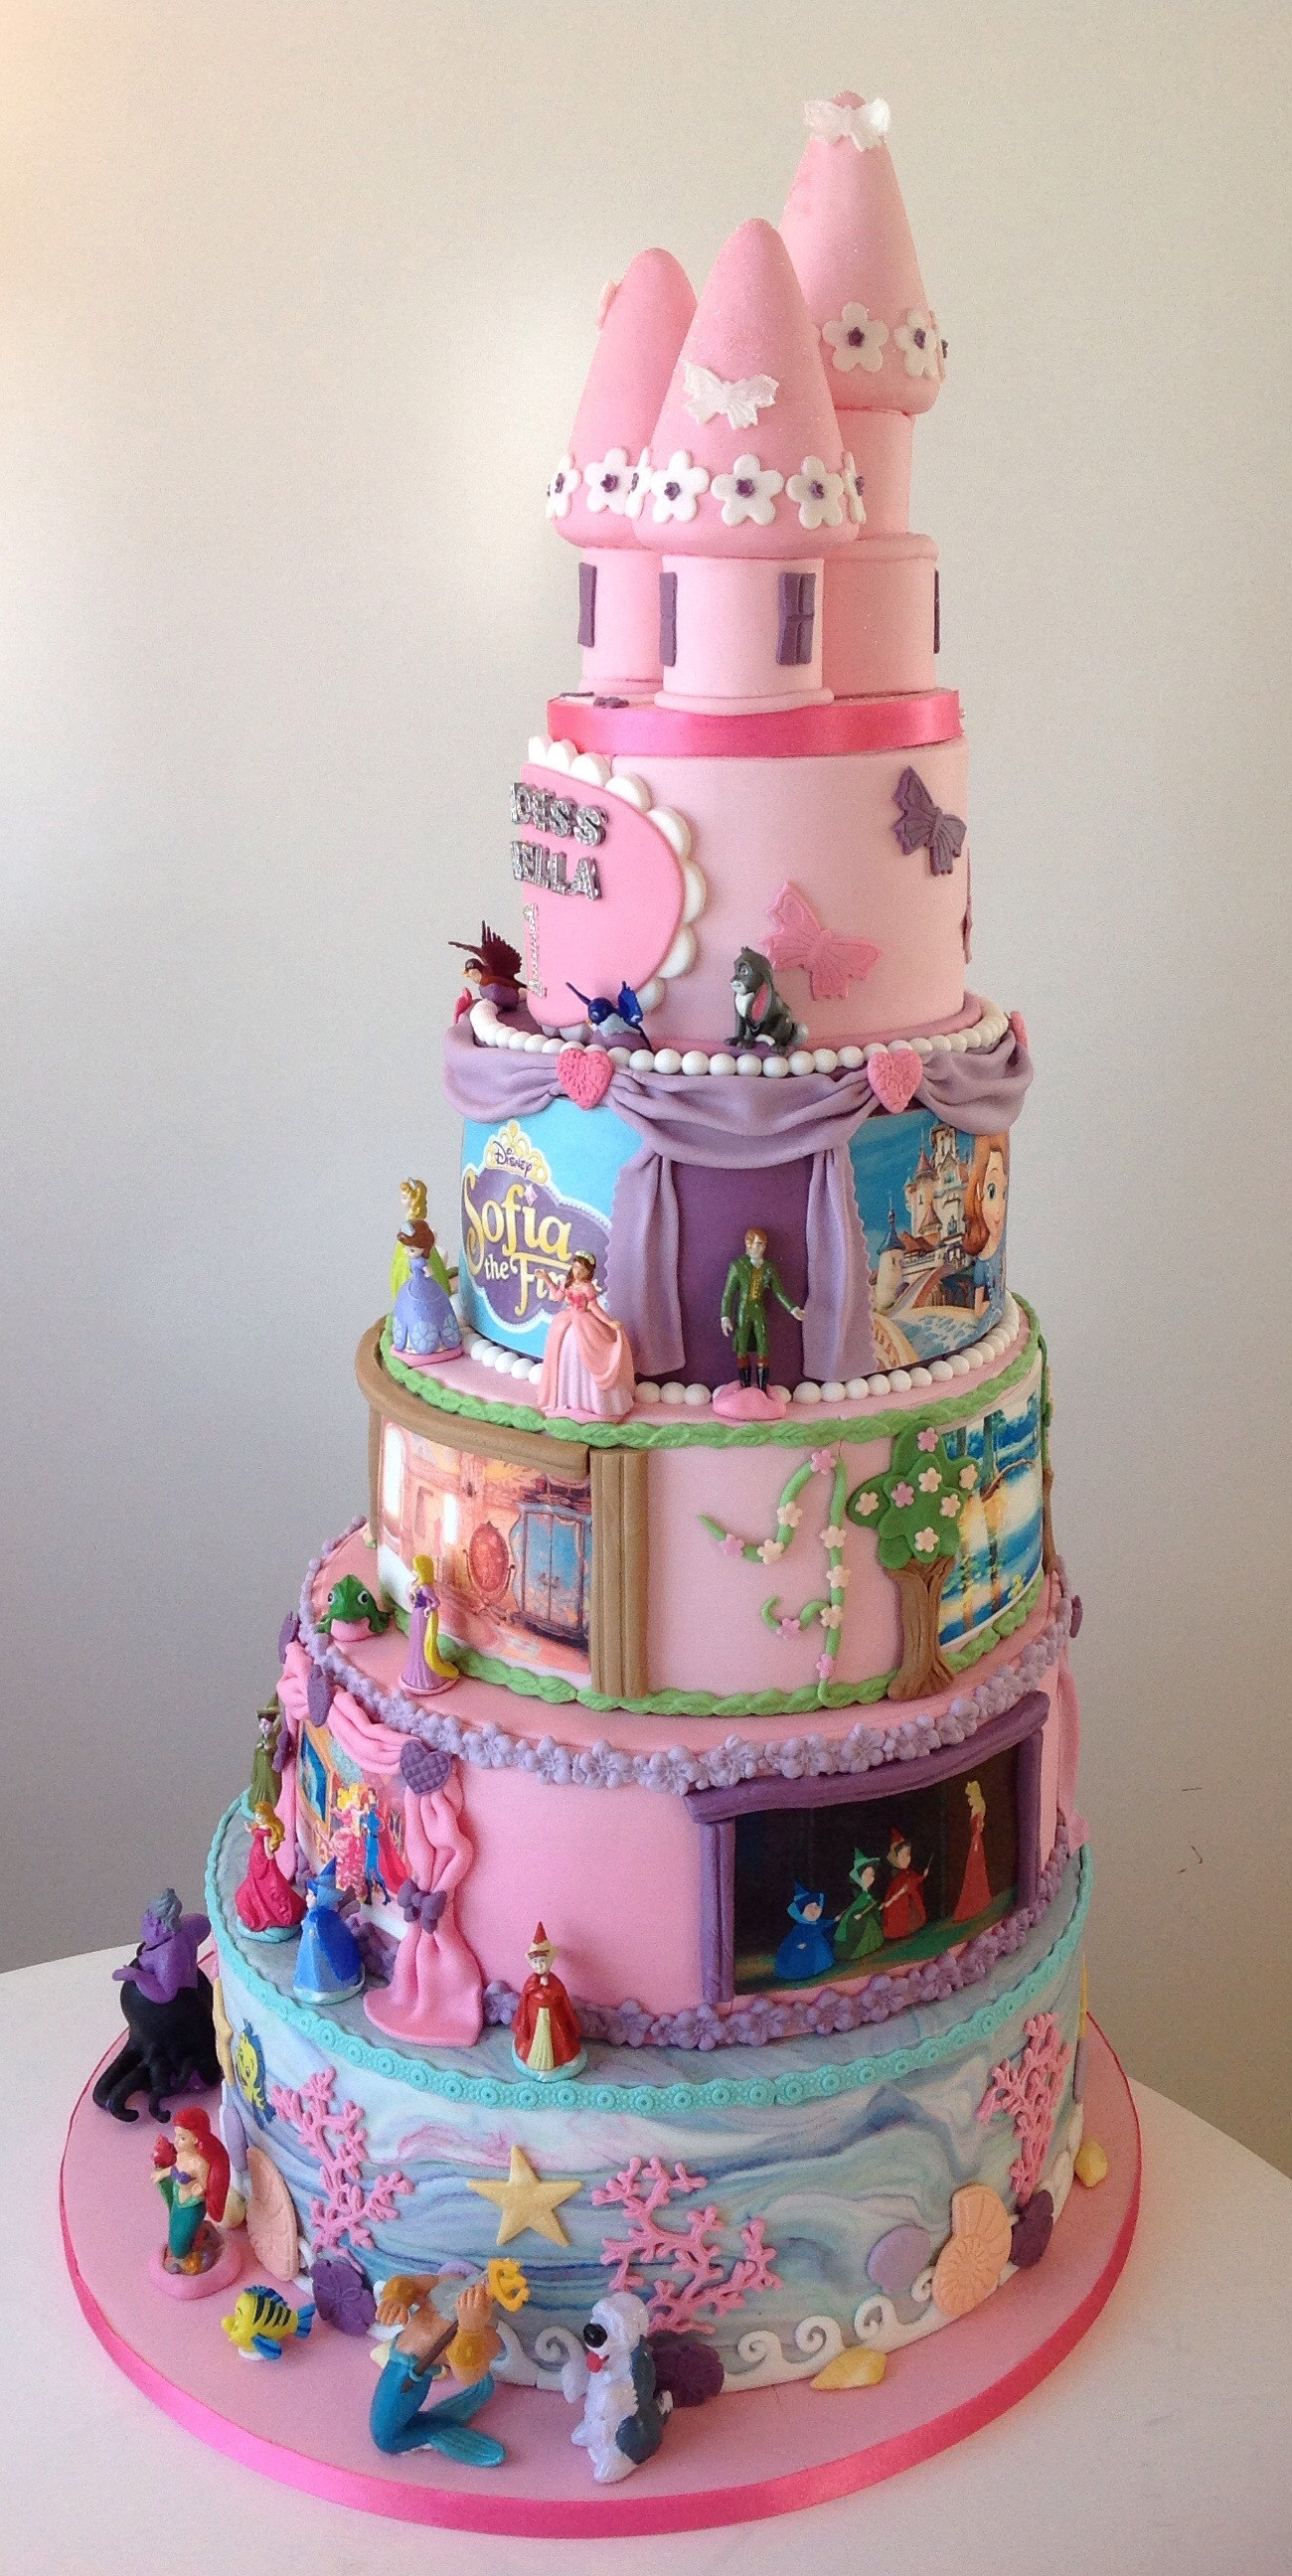 Best ideas about Disney Princess Birthday Cake
. Save or Pin Disney Princess 1St Birthday Cake CakeCentral Now.